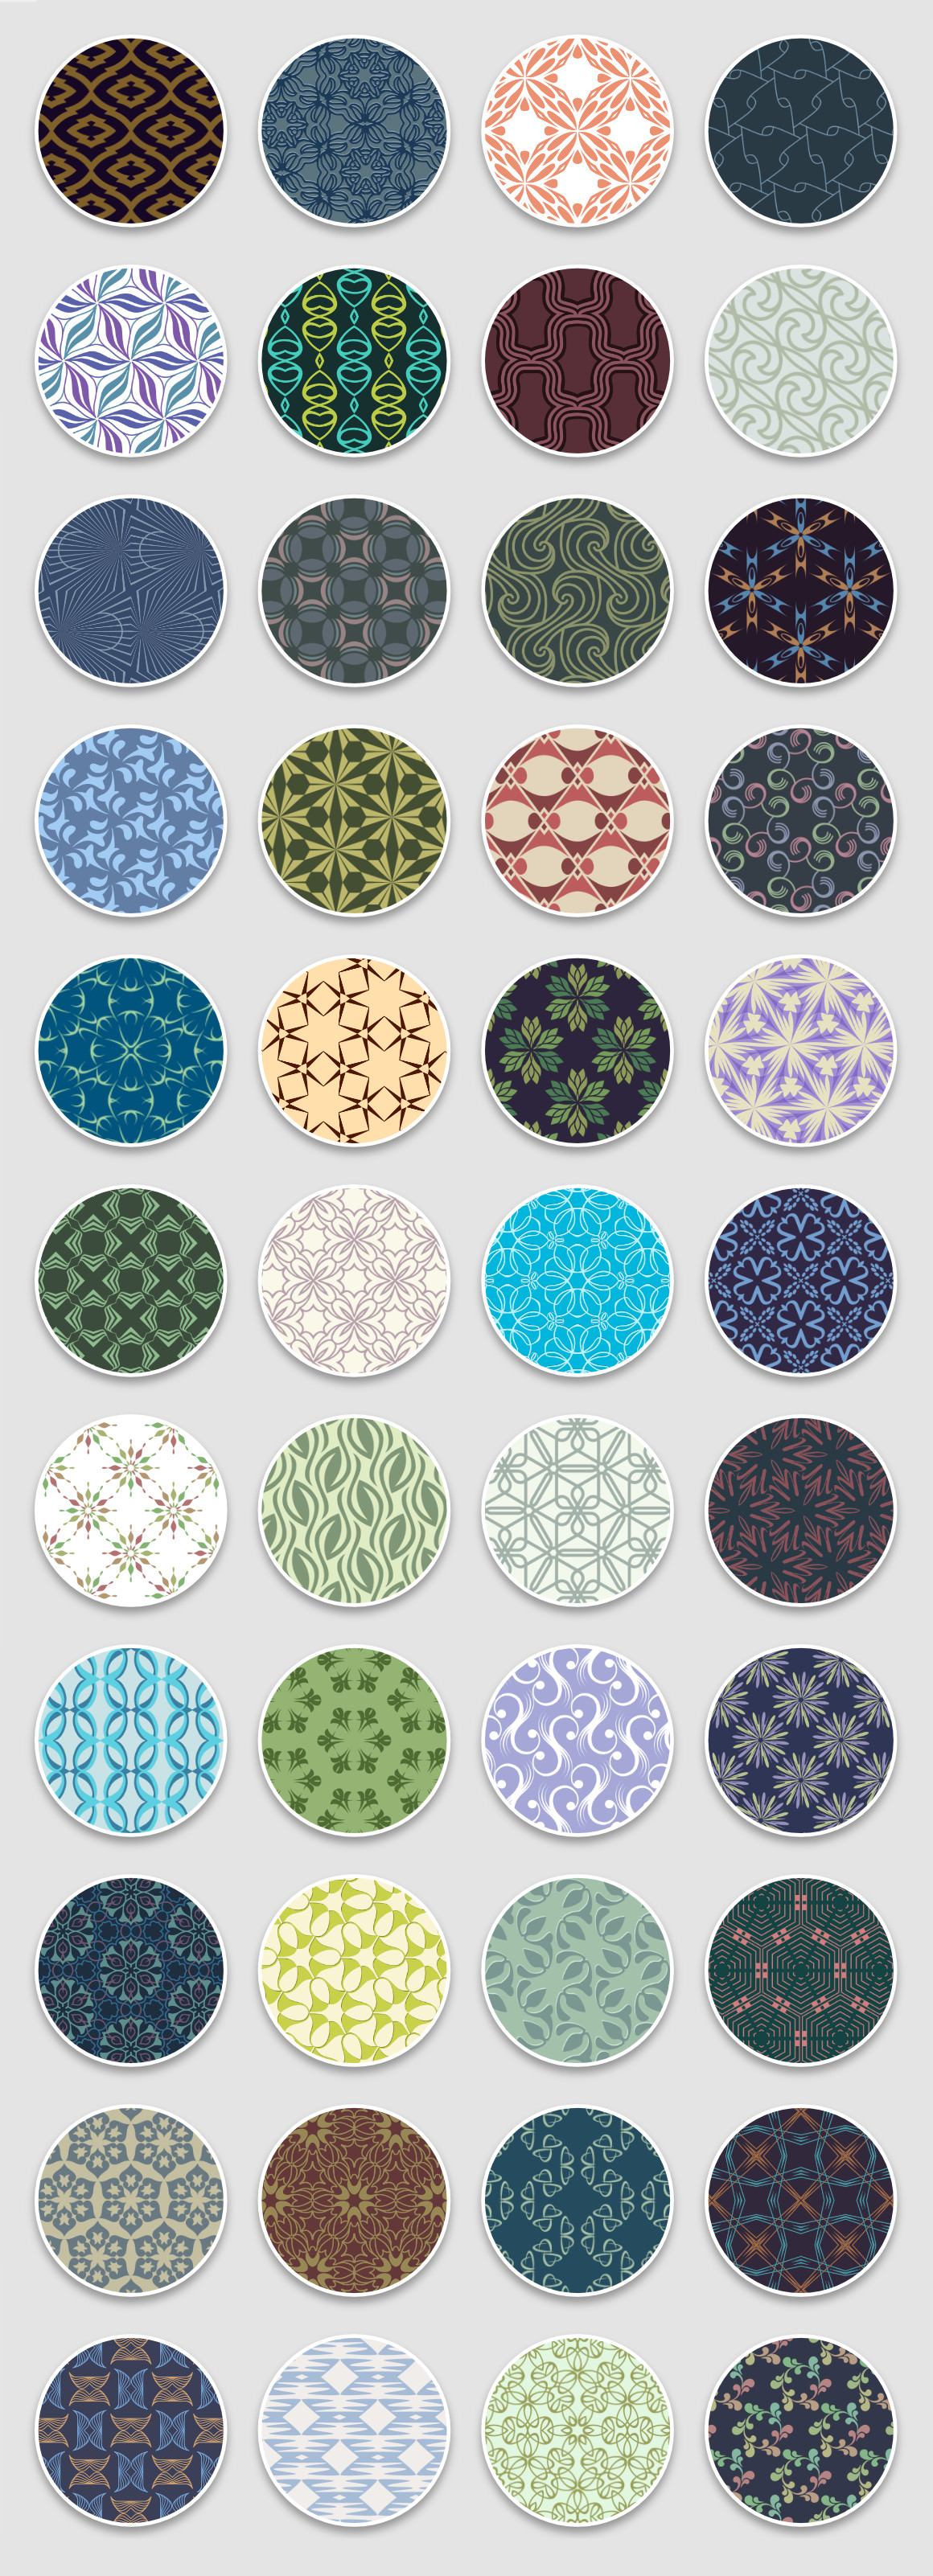 patterns